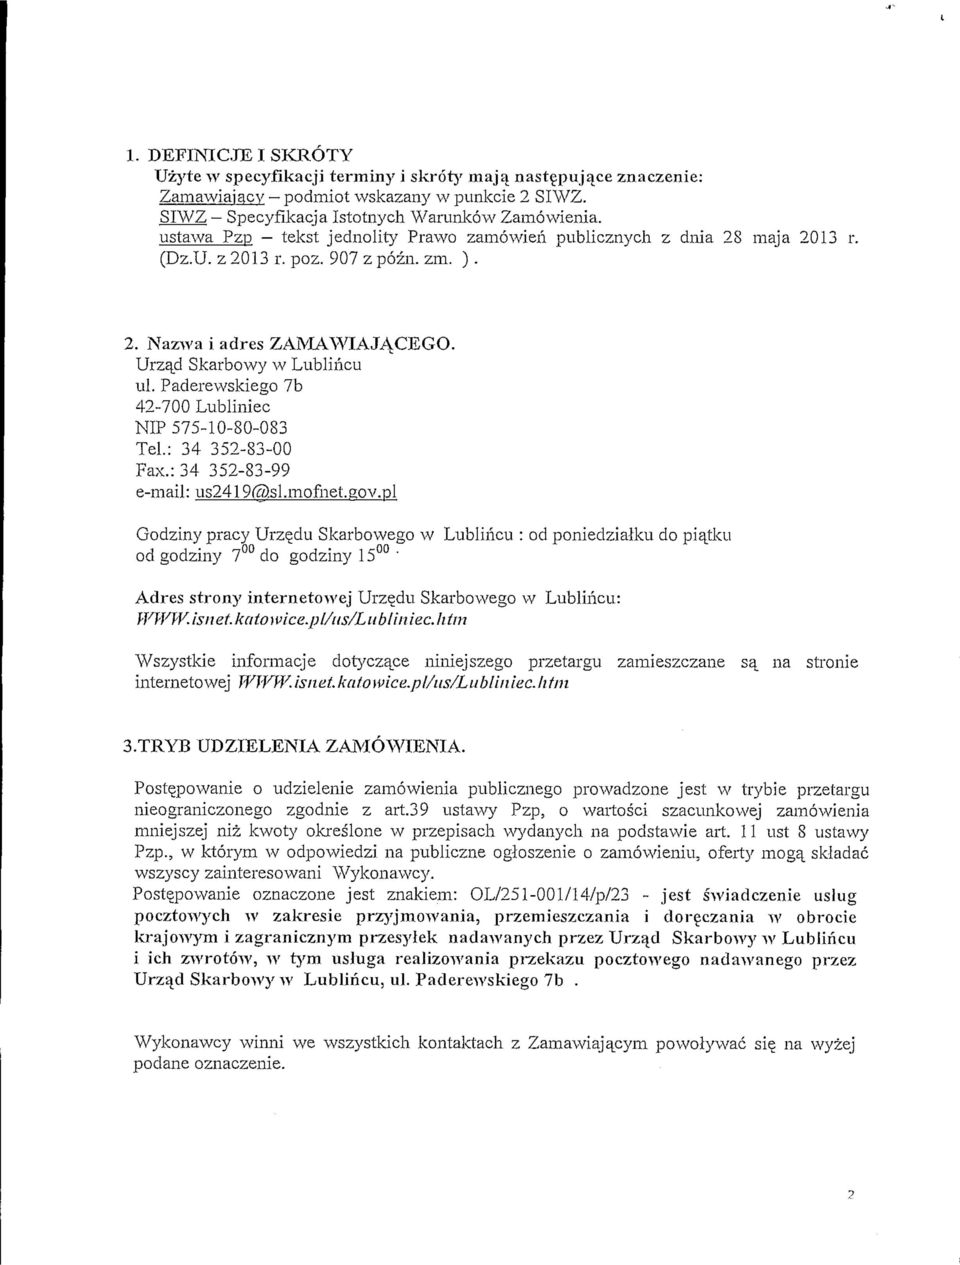 Paderewskiego 7b 42-700 Lubliniec NIP 575-10-80-083 Tel: 34 352-83-00 Fax.: 34 352-83-99 e-mail: us2419(s).sl.mofnet.gov.